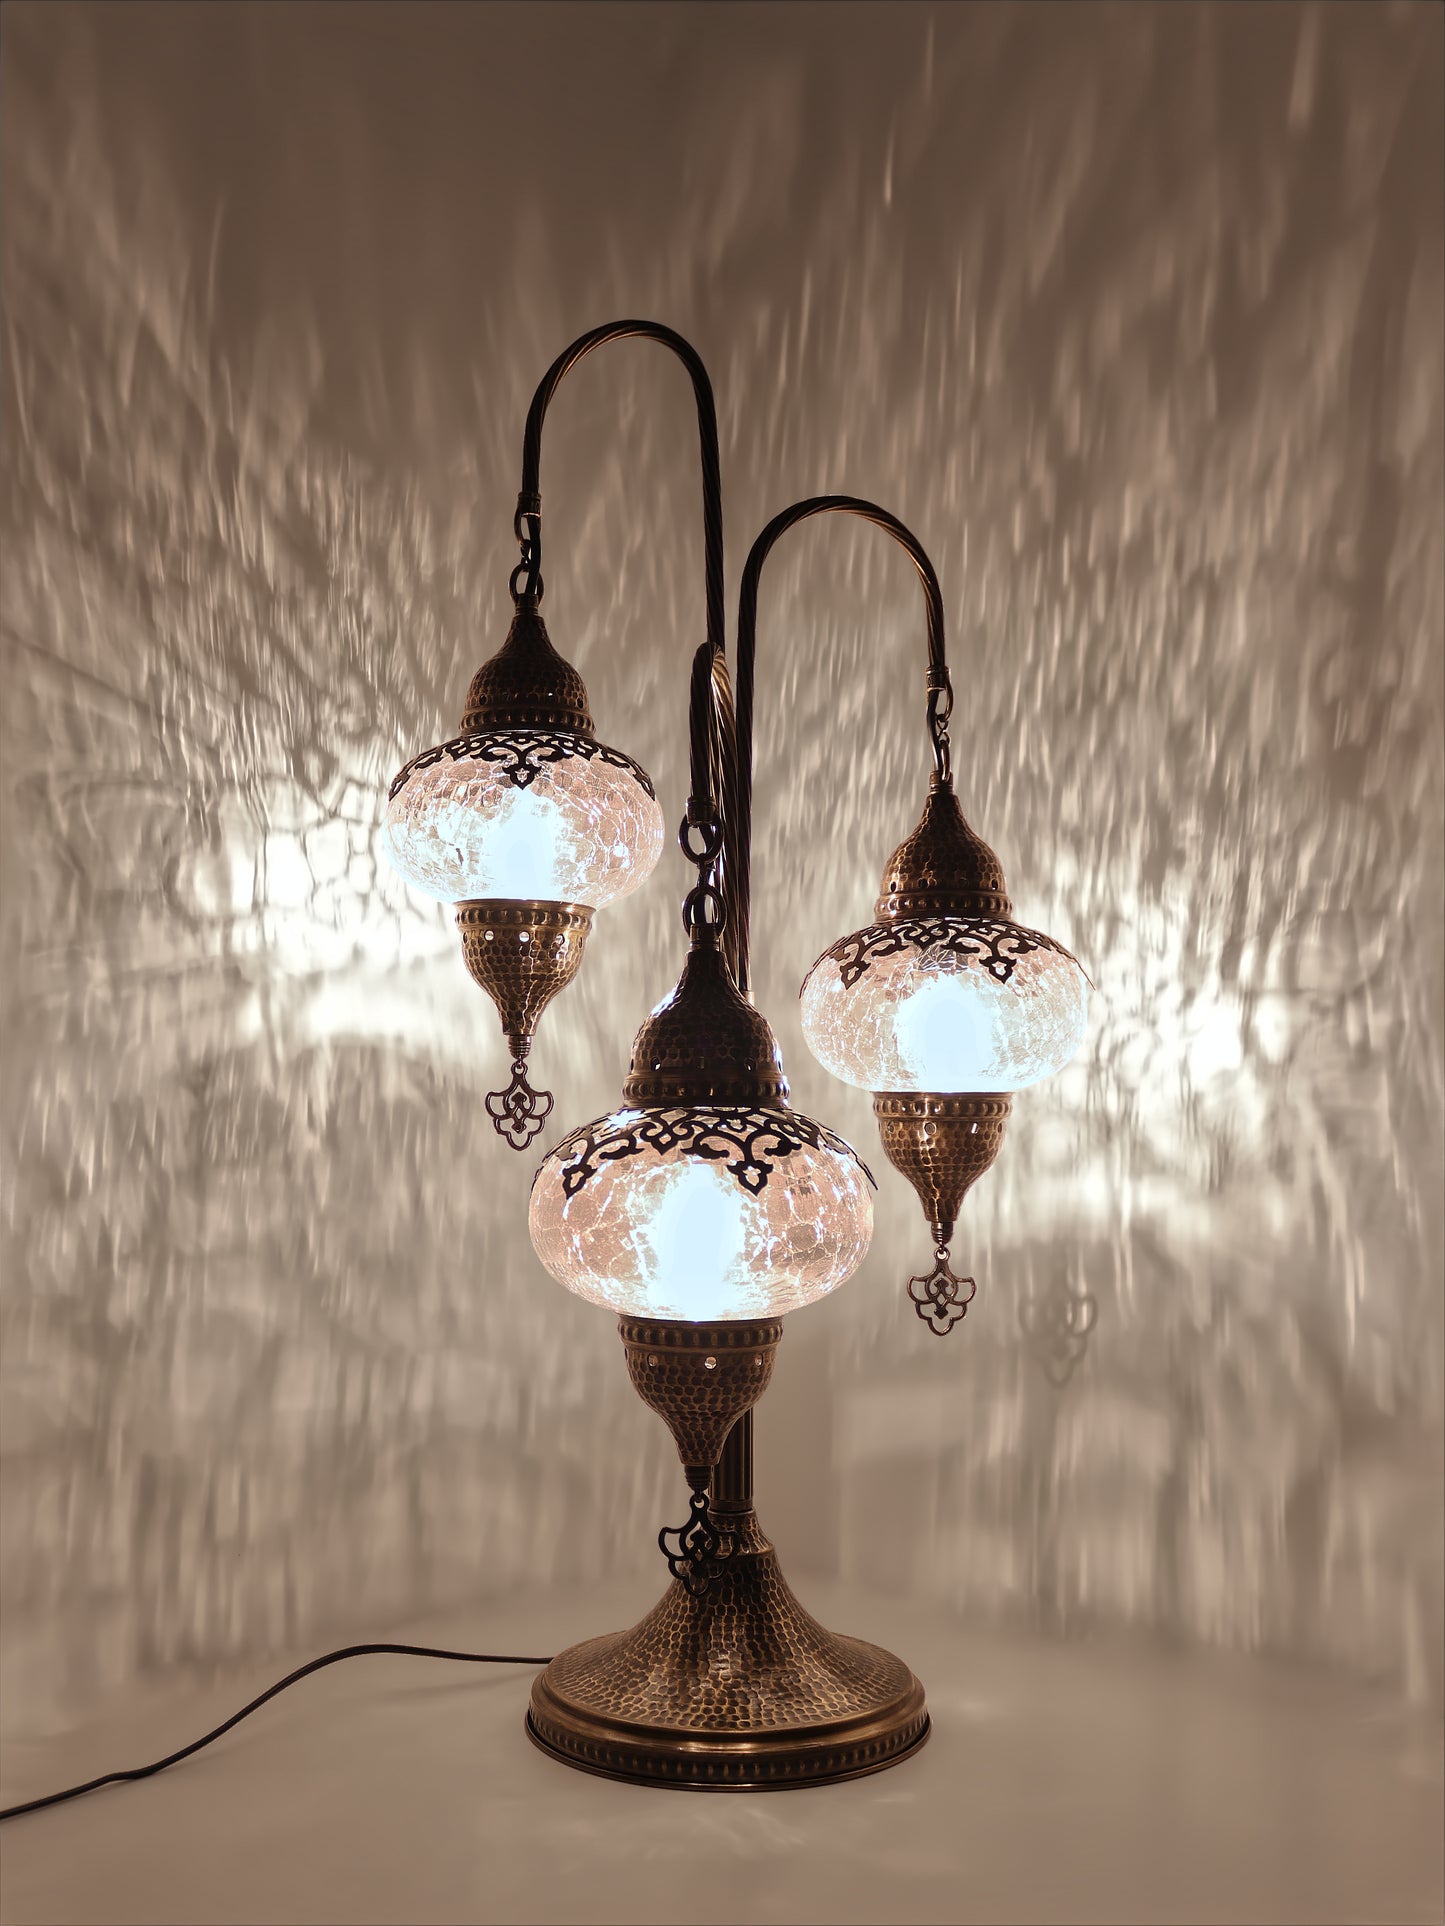 Swan Neck Mosaic Table Lamp, Gold, Model 3 (Medium) - Mosaic Lamps